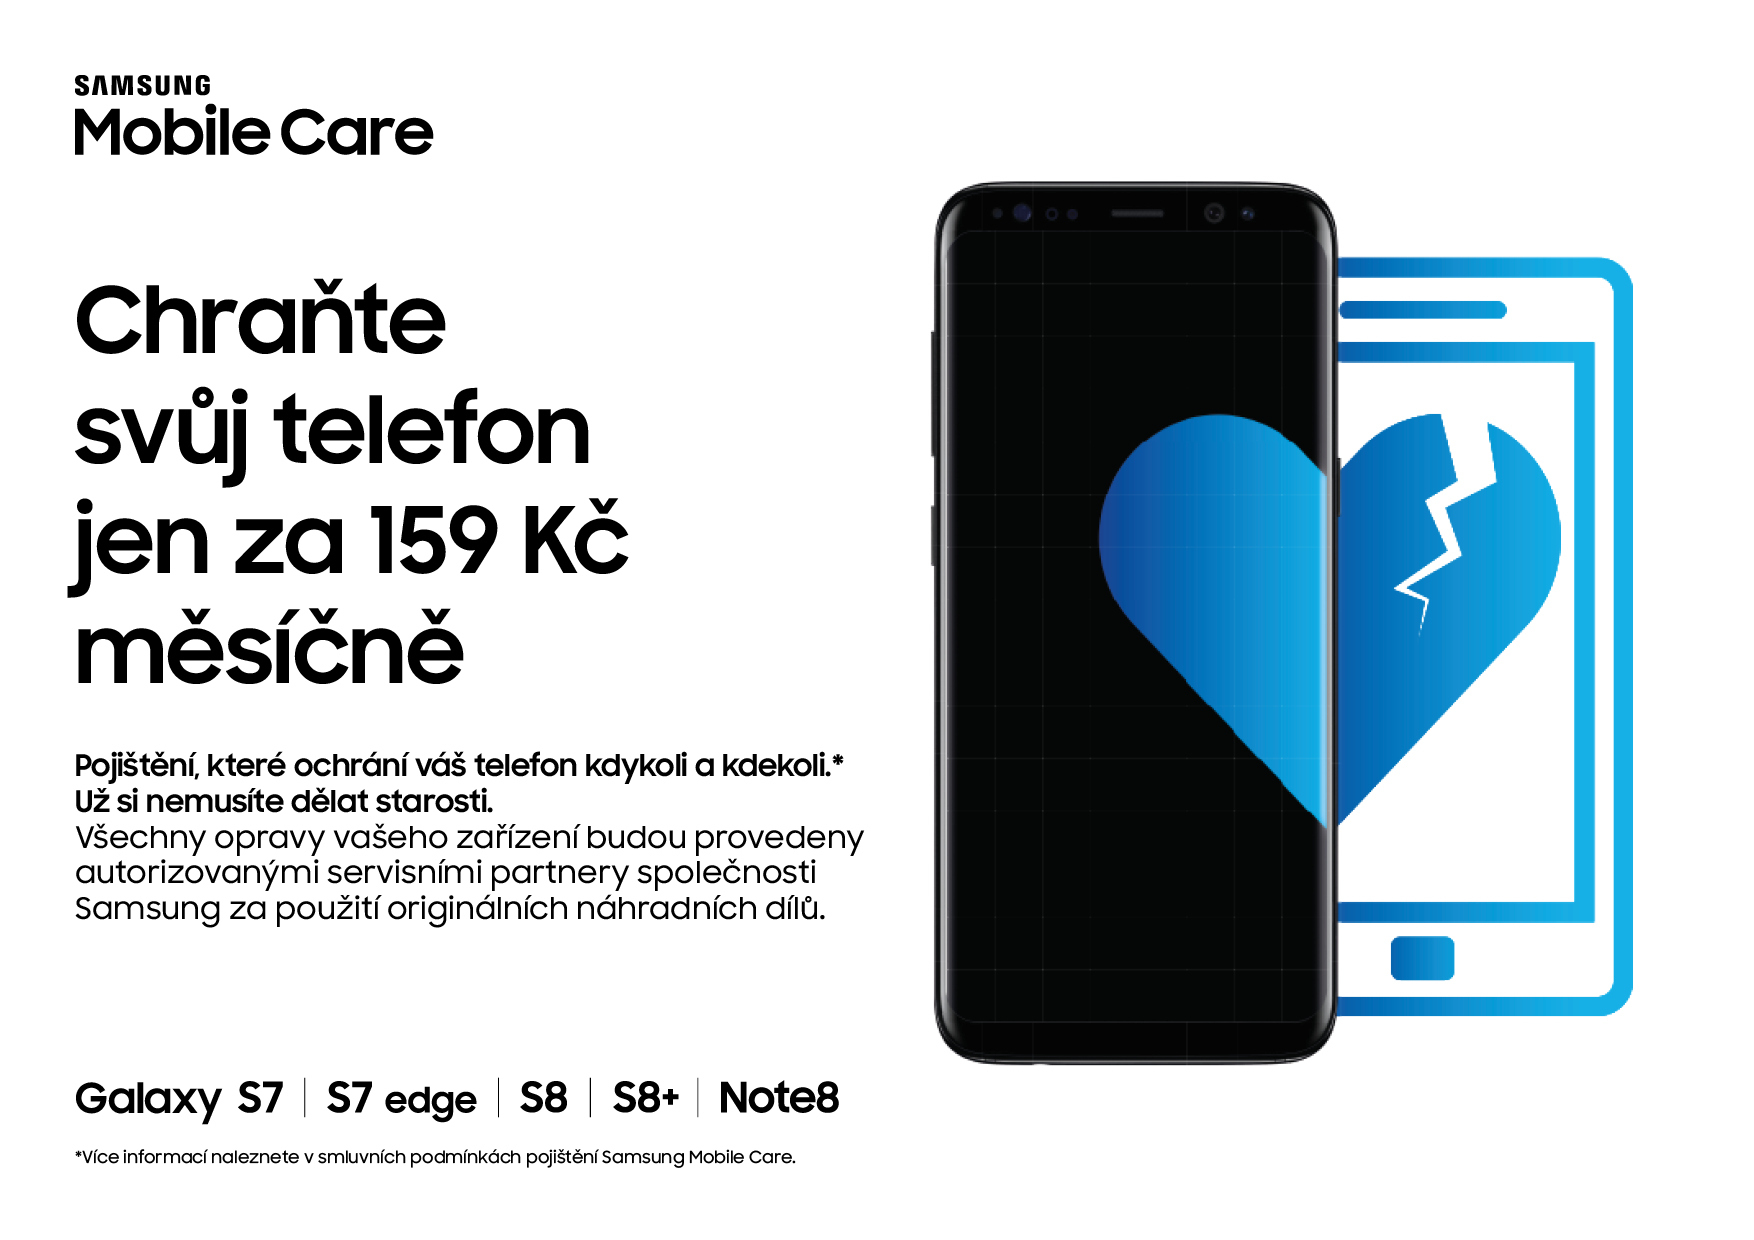 Samsung Mobile Care